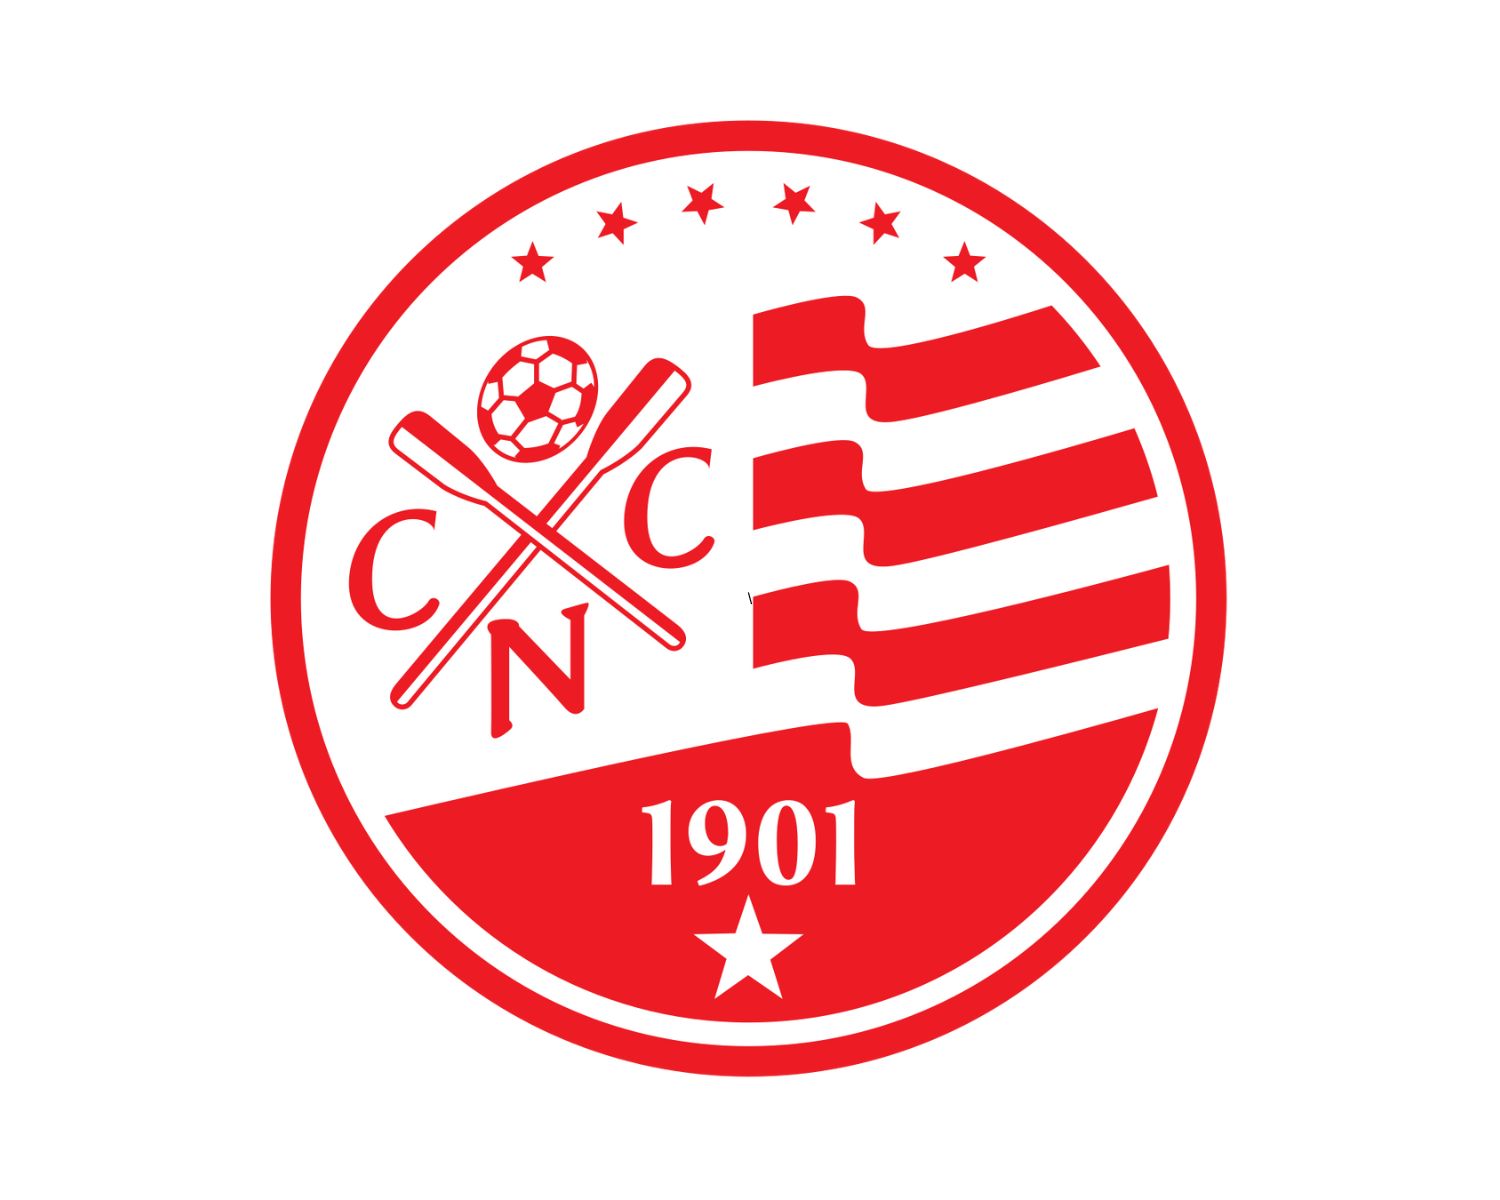 clube-nautico-capibaribe-11-football-club-facts